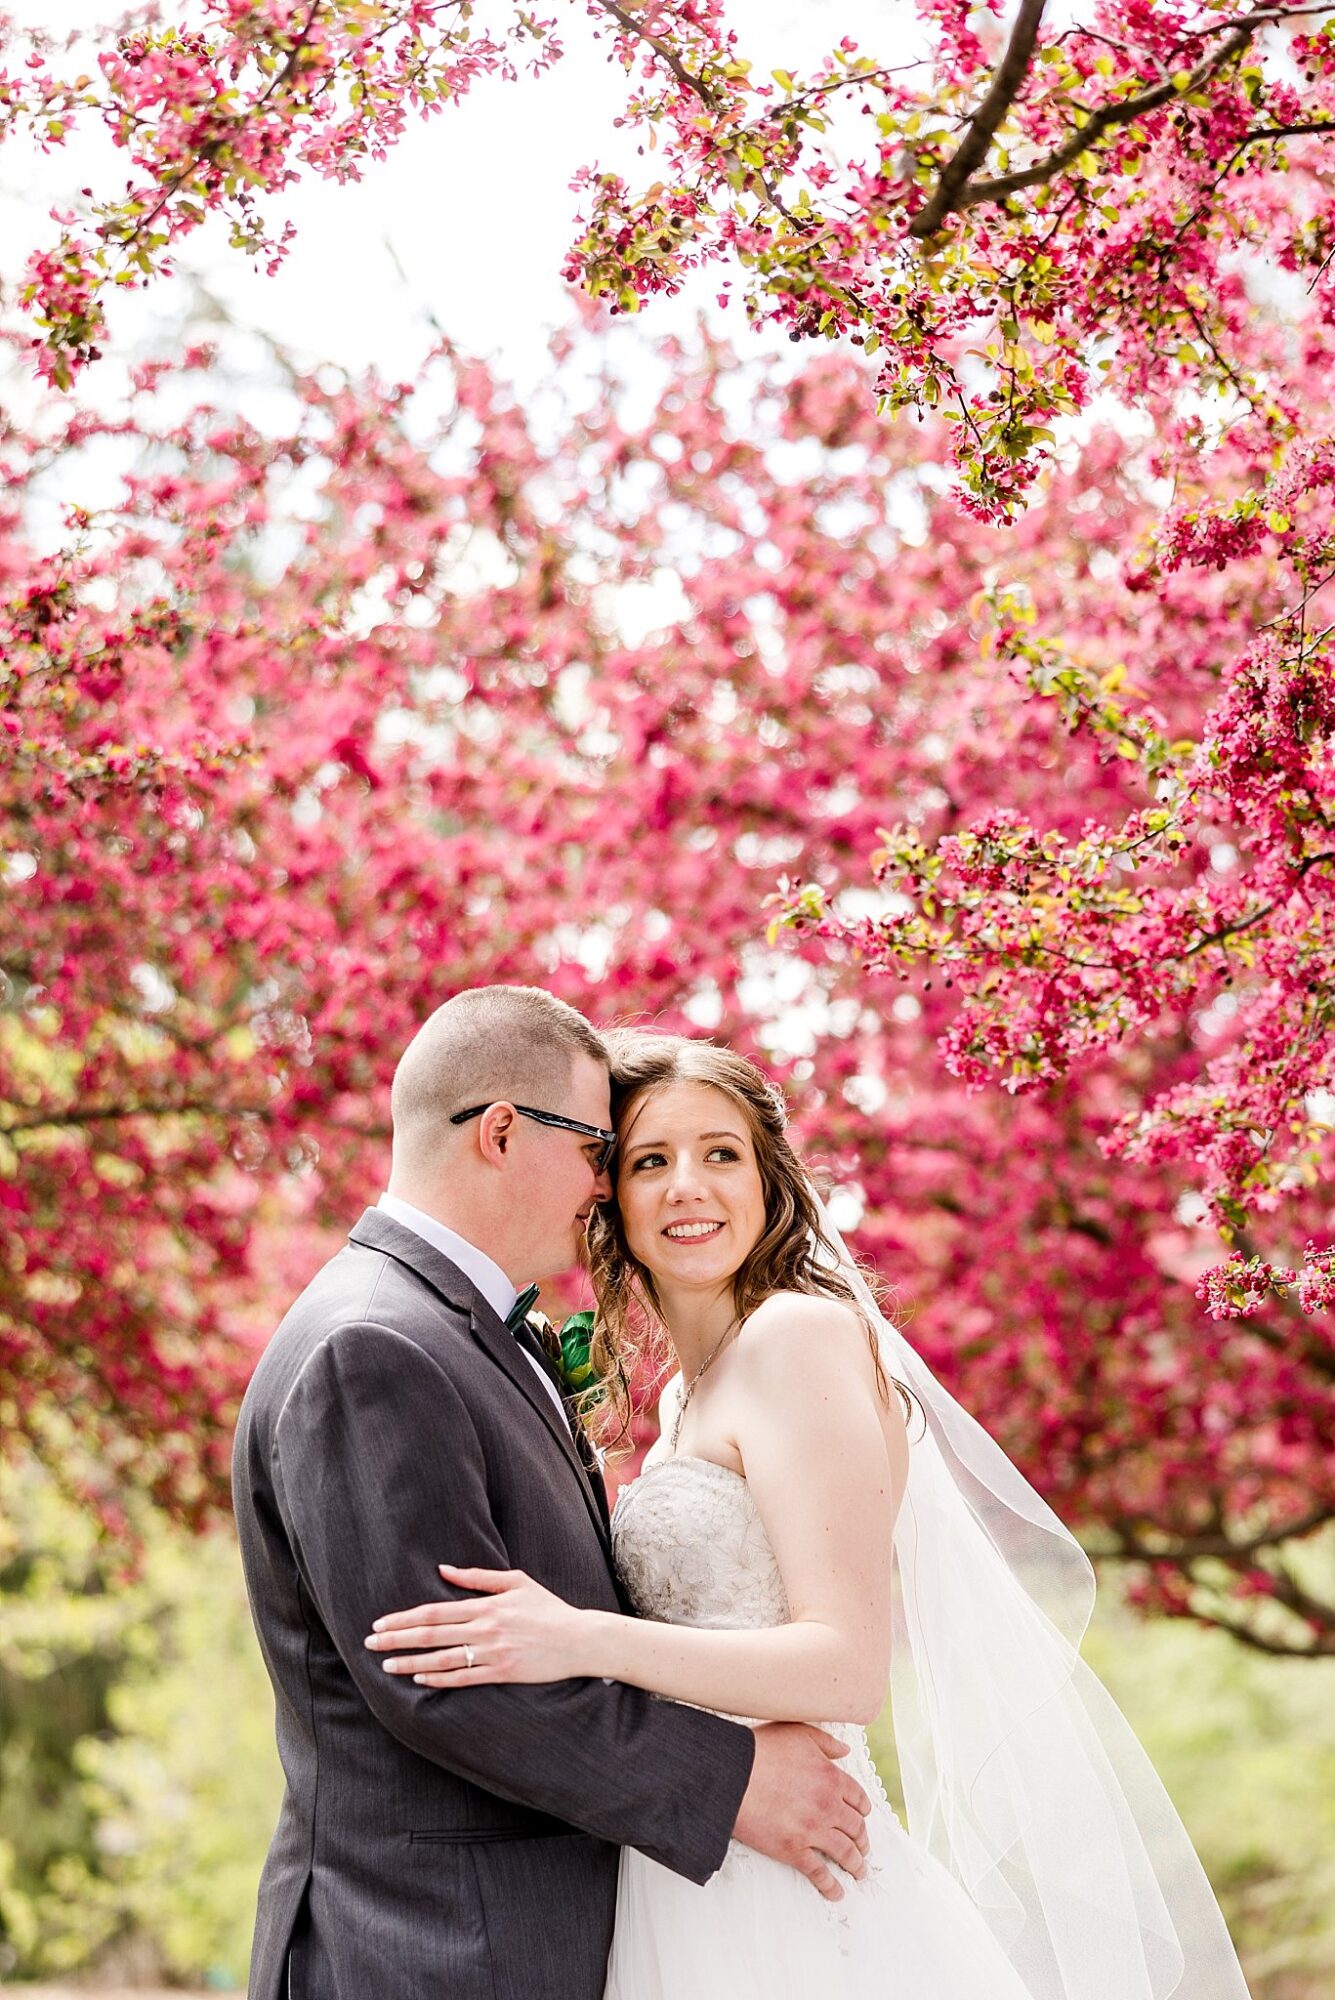 Wedding photographs under flowering trees at Hawk Hollow in Bath Michigan